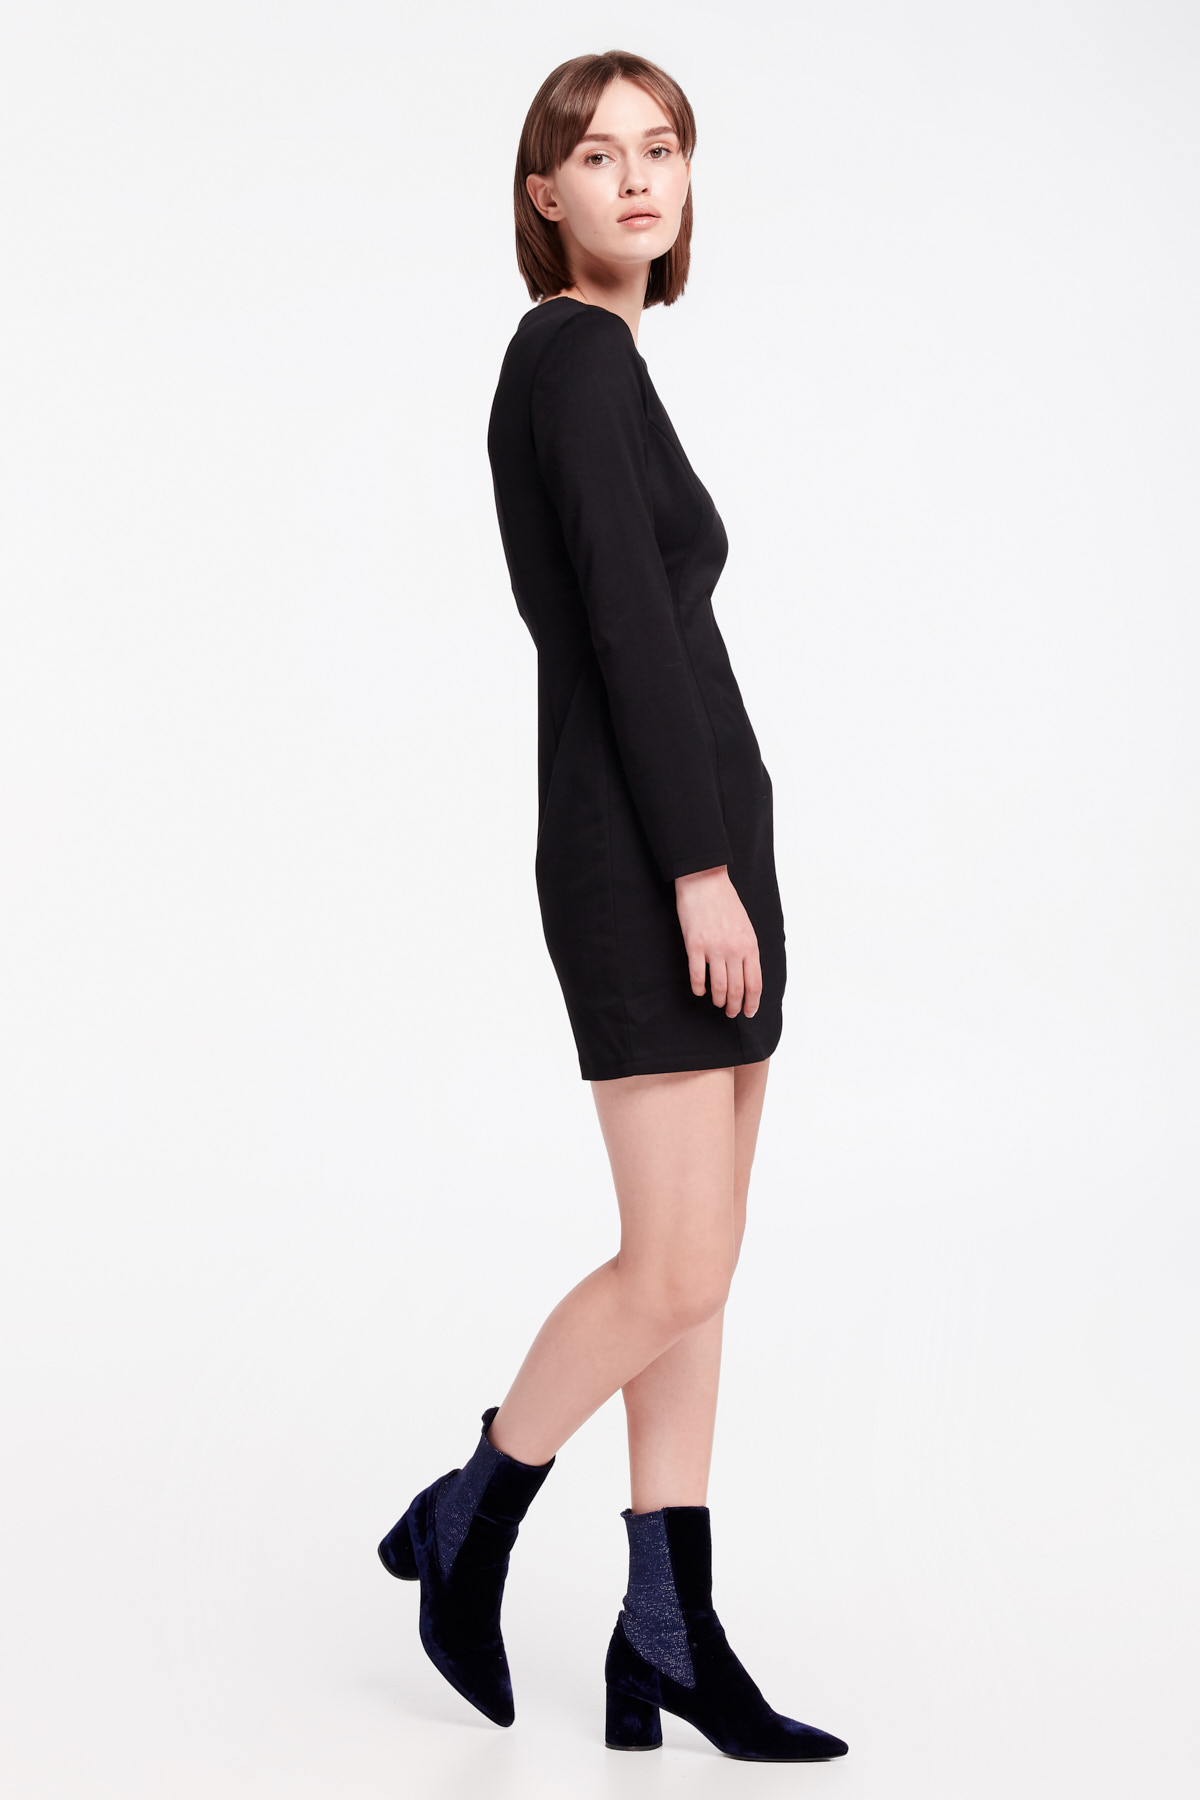 Black dress with above-knee asymmetric cut, photo 7